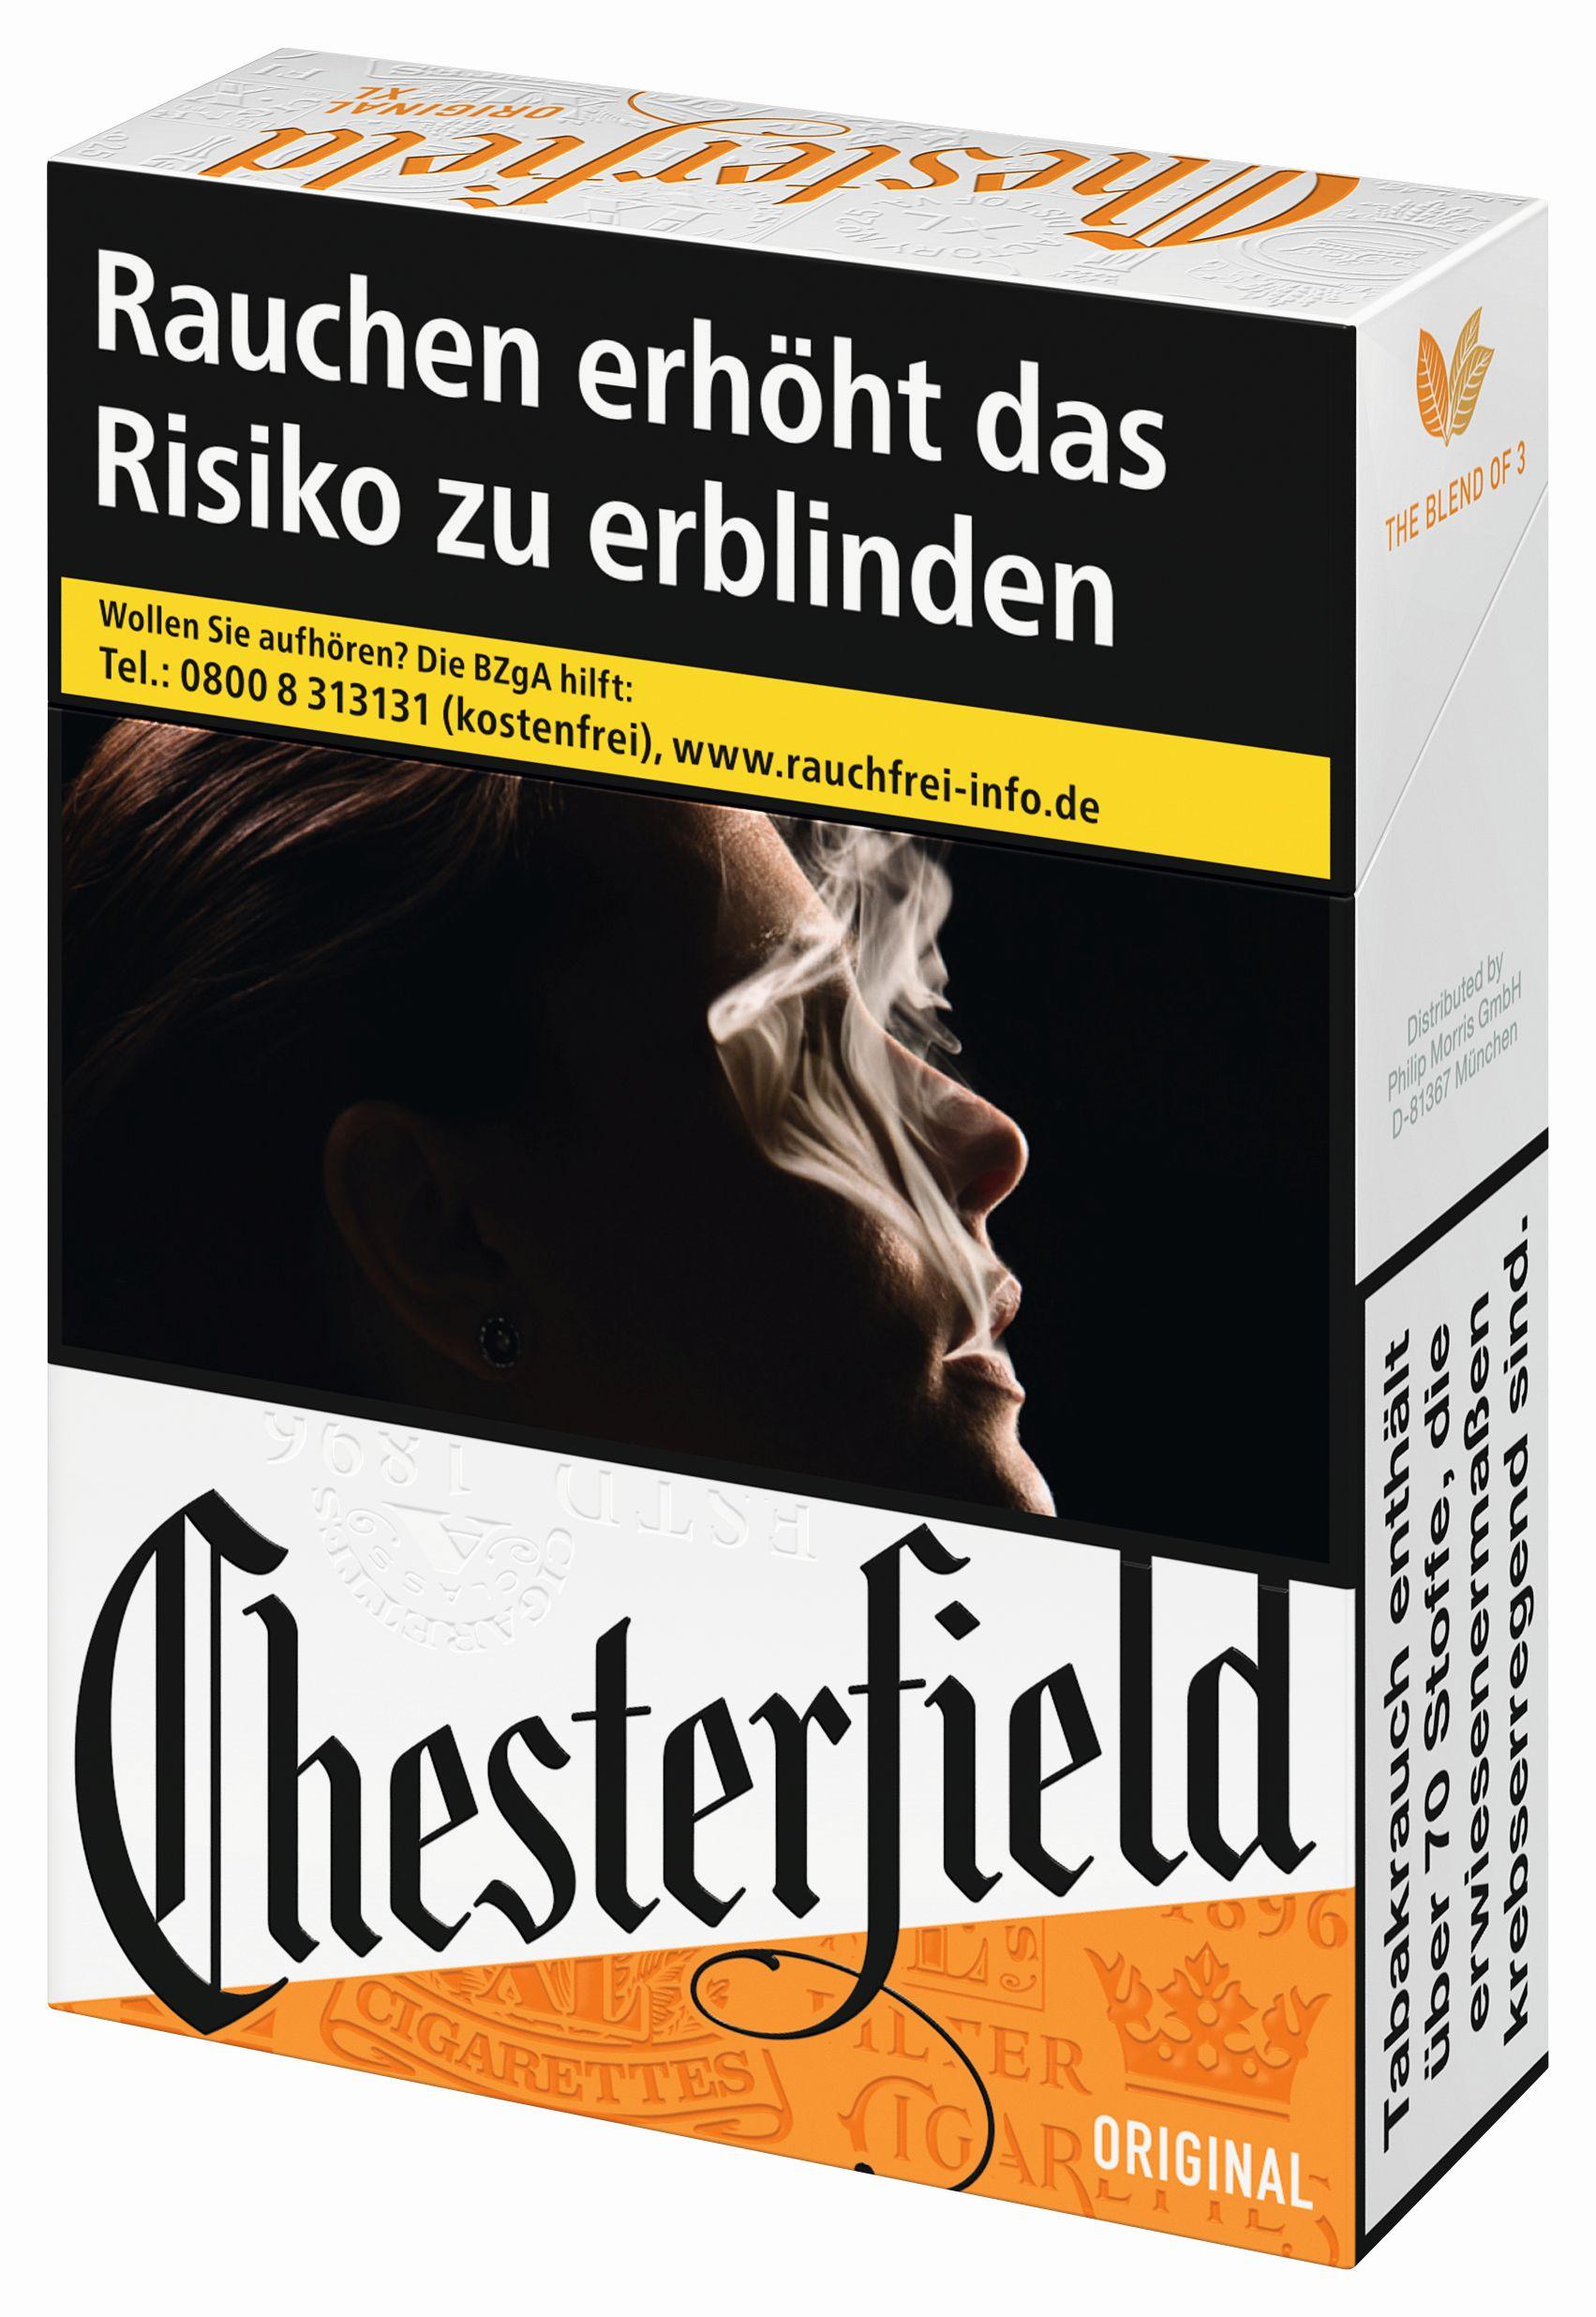 Chesterfield Original (Red) XL Zigaretten 1 Packung